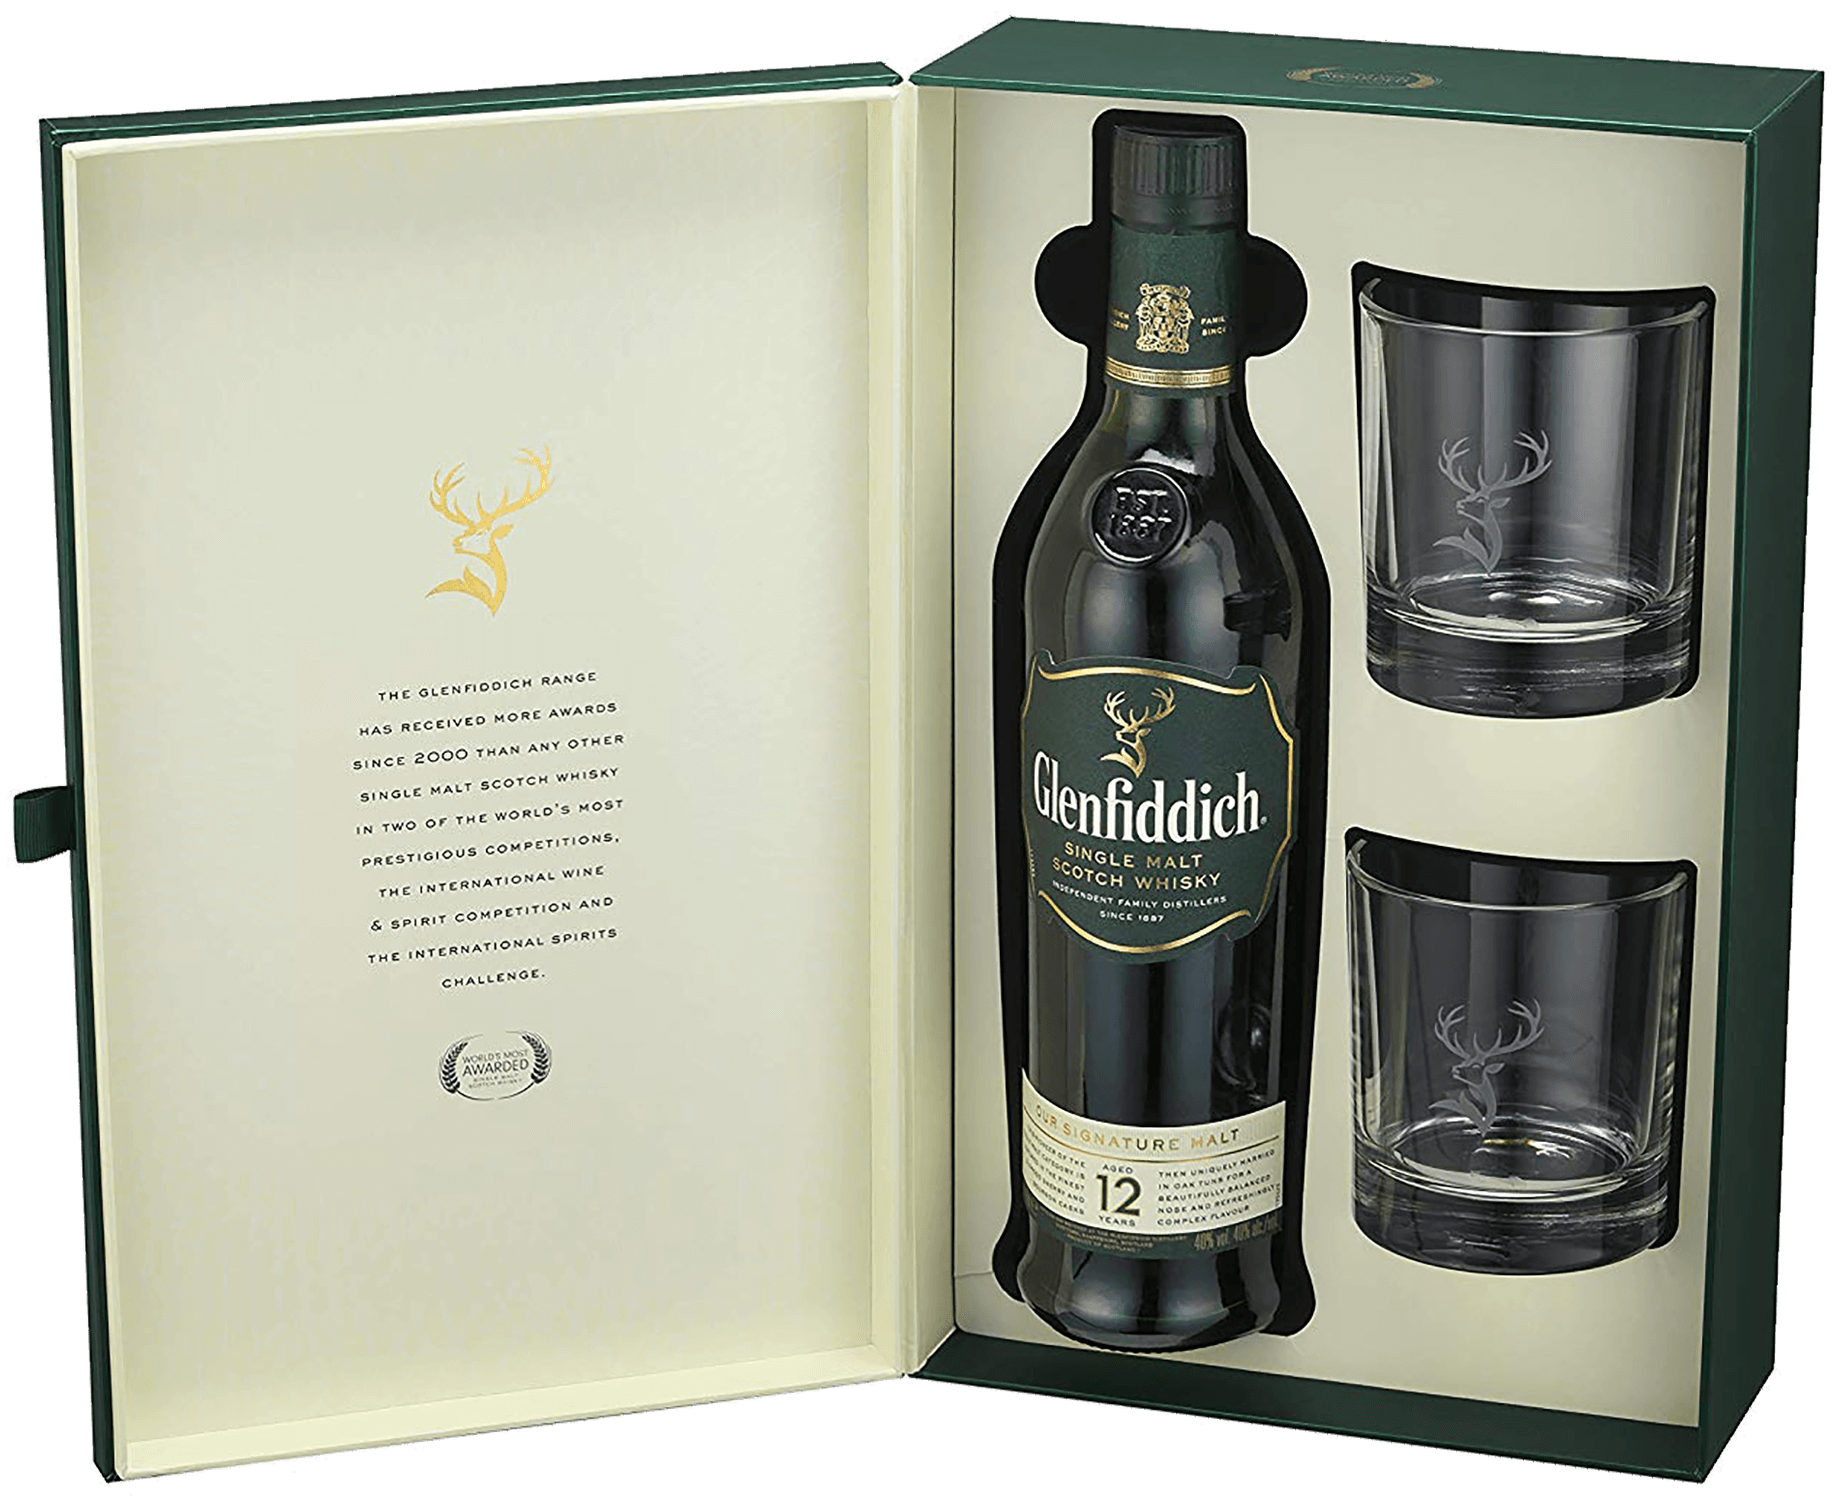 Glenfiddich 12 y.o. Single Malt Scotch Whisky (gift box with 2 glasses) the glenlivet founder s reserve single malt scotch whisky gift box with 2 glasses